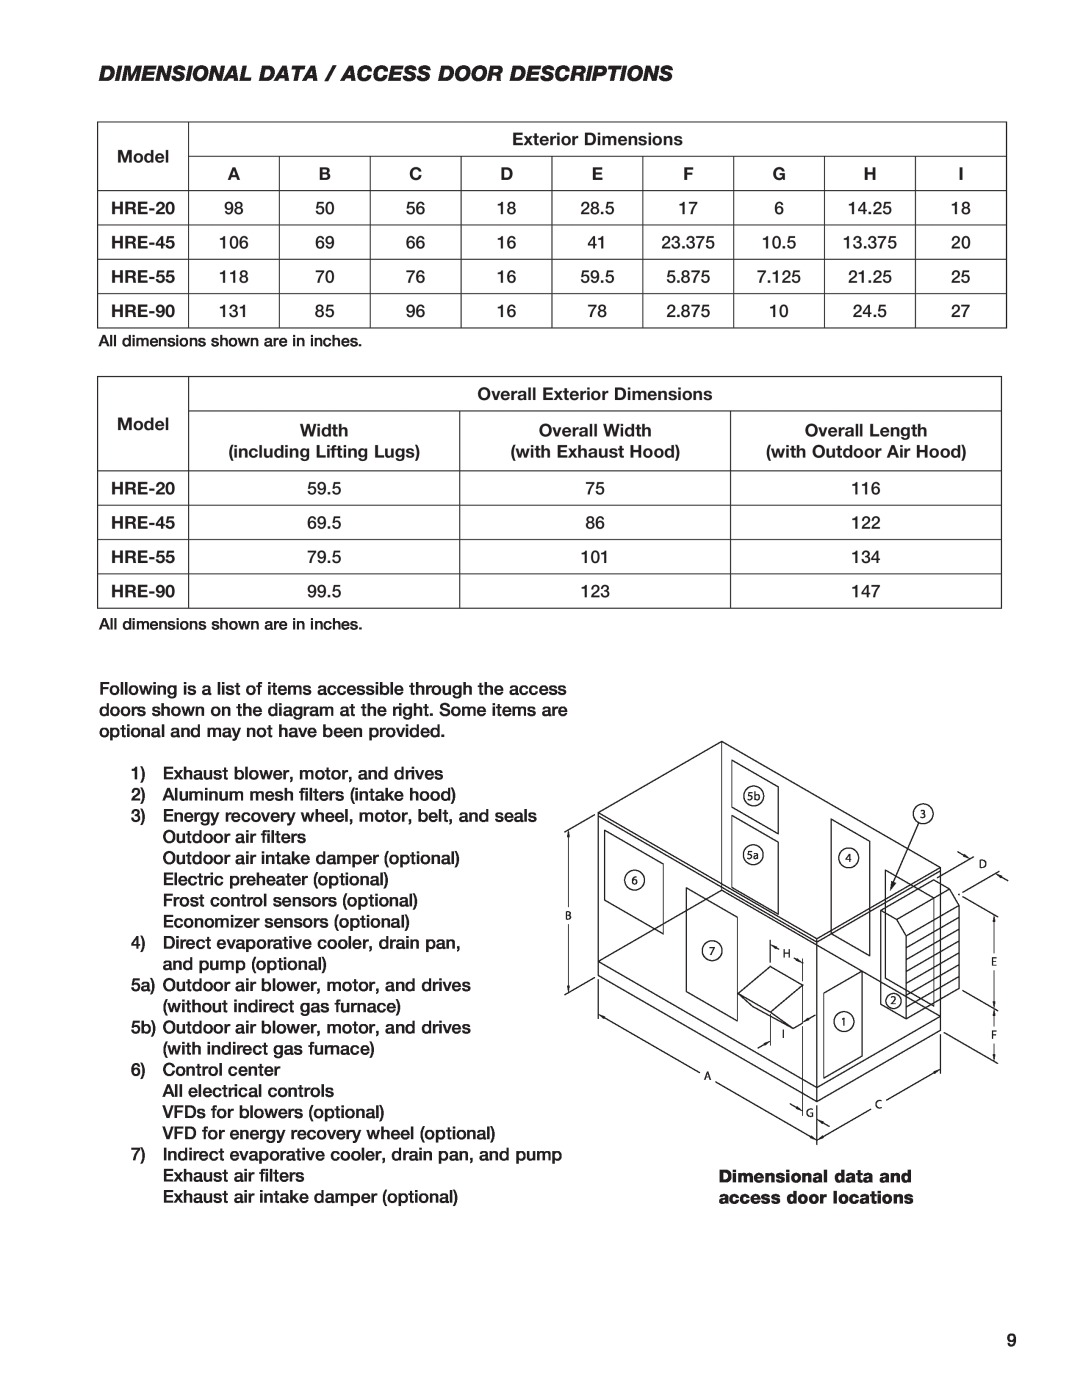 Greenheck Fan Dimensional Data / Access Door Descriptions, Model, Exterior Dimensions, HRE-20, HRE-45, HRE-55, HRE-90 